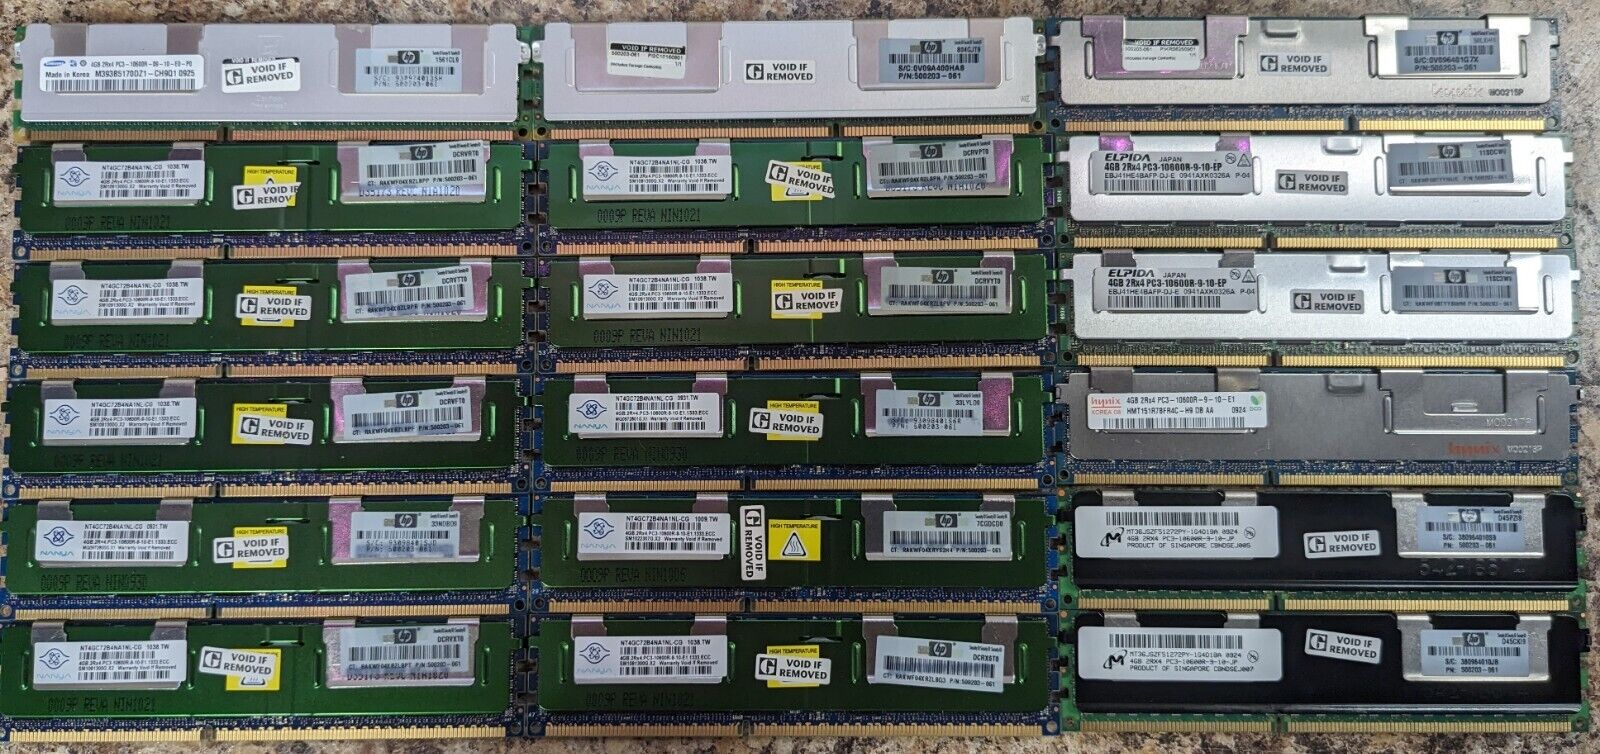 18x4GB Micron, hynix, ELPIDA, Nanya, Samsung ECC RDIMM HP 500203-061 for Servers